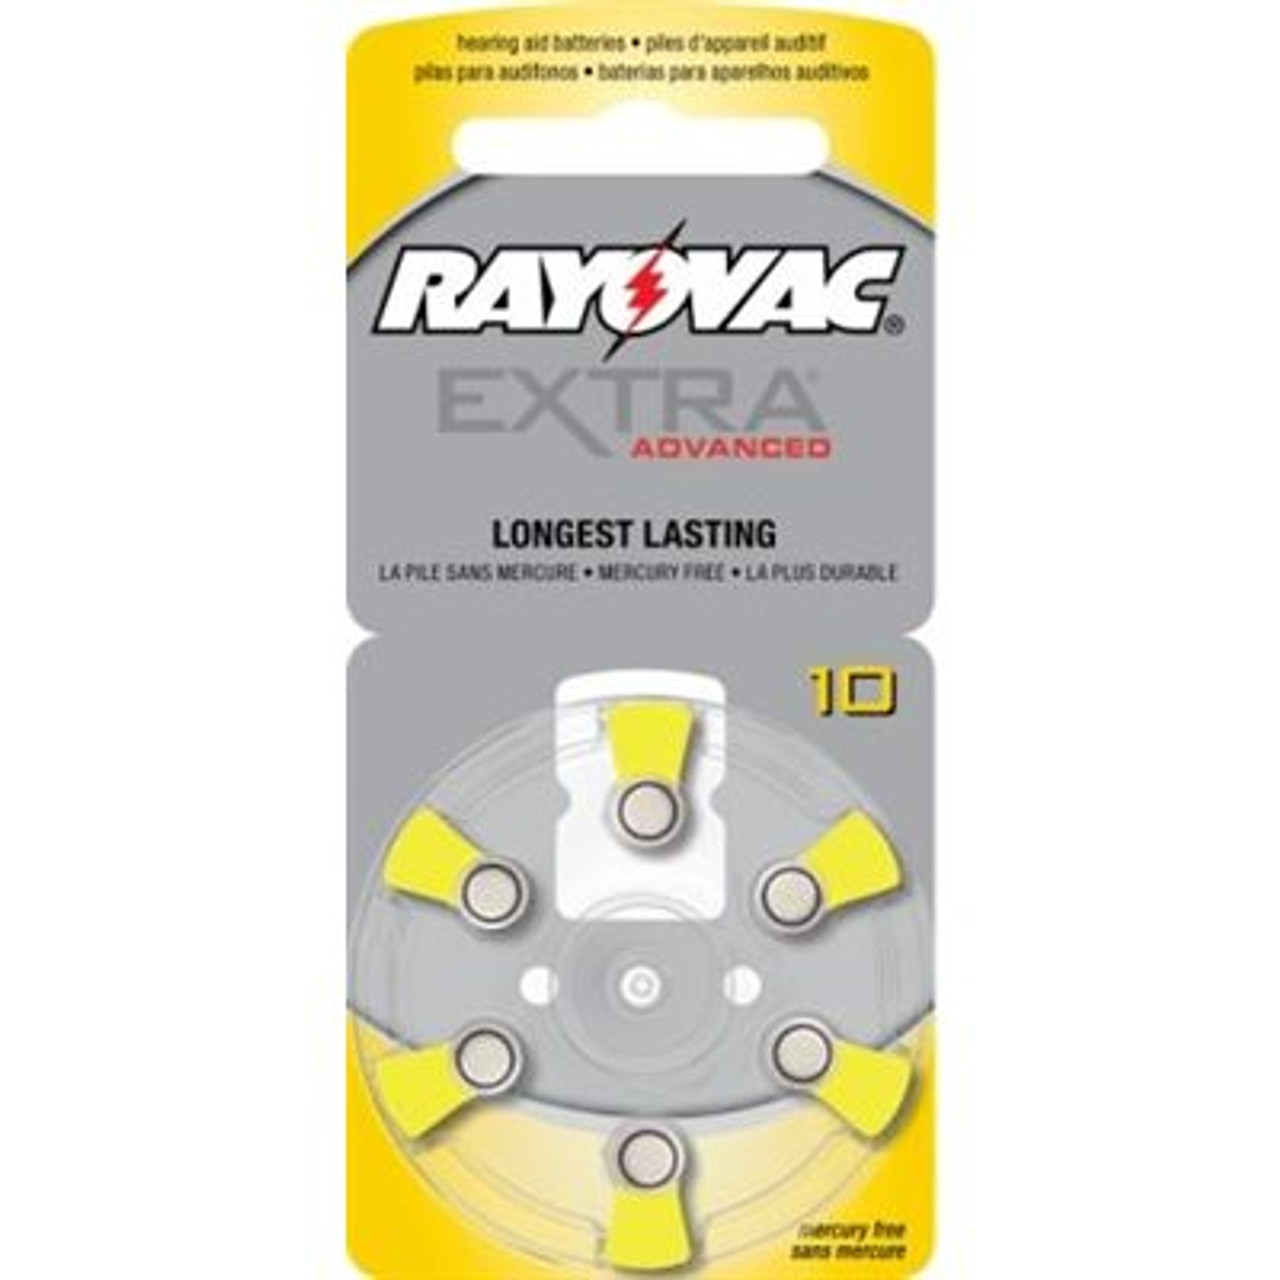 Rayovac Extra Advanced ZM Batteries, size 312 (10 cards of 8 batt)